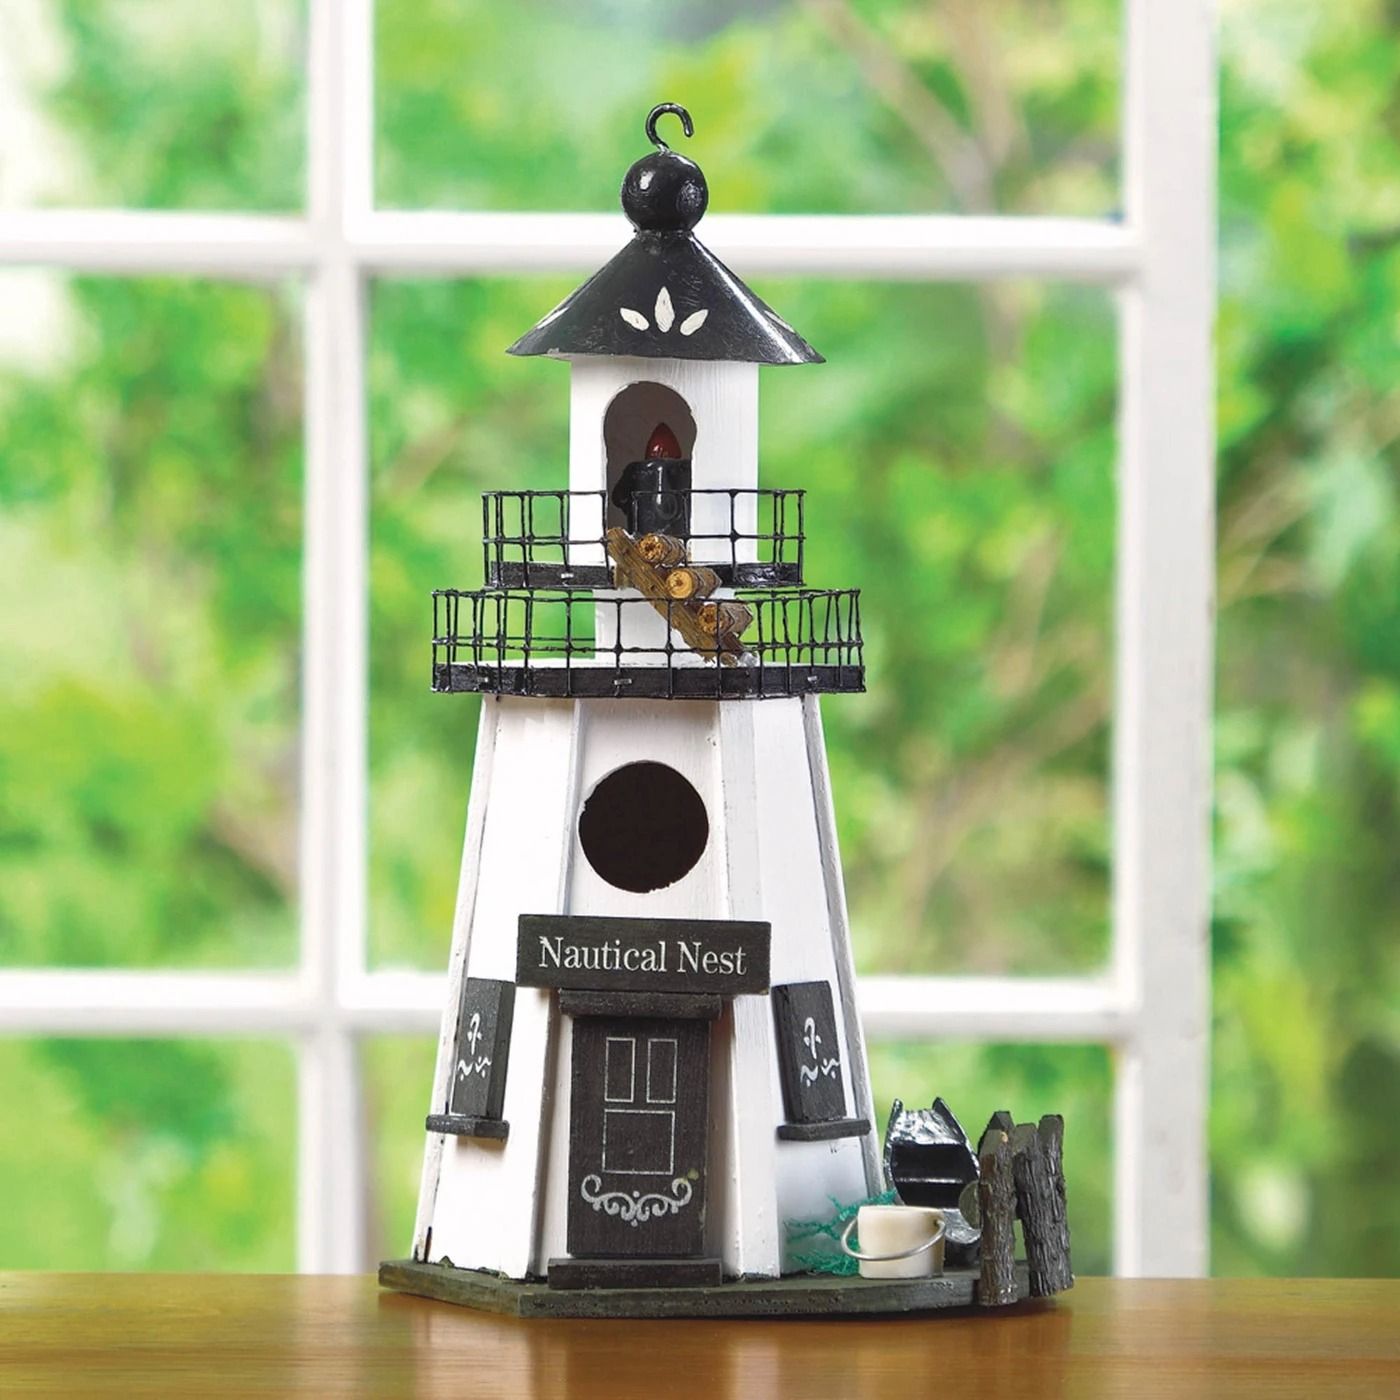 Nautical Decorative Bird House - Wooden Lighthouse Style